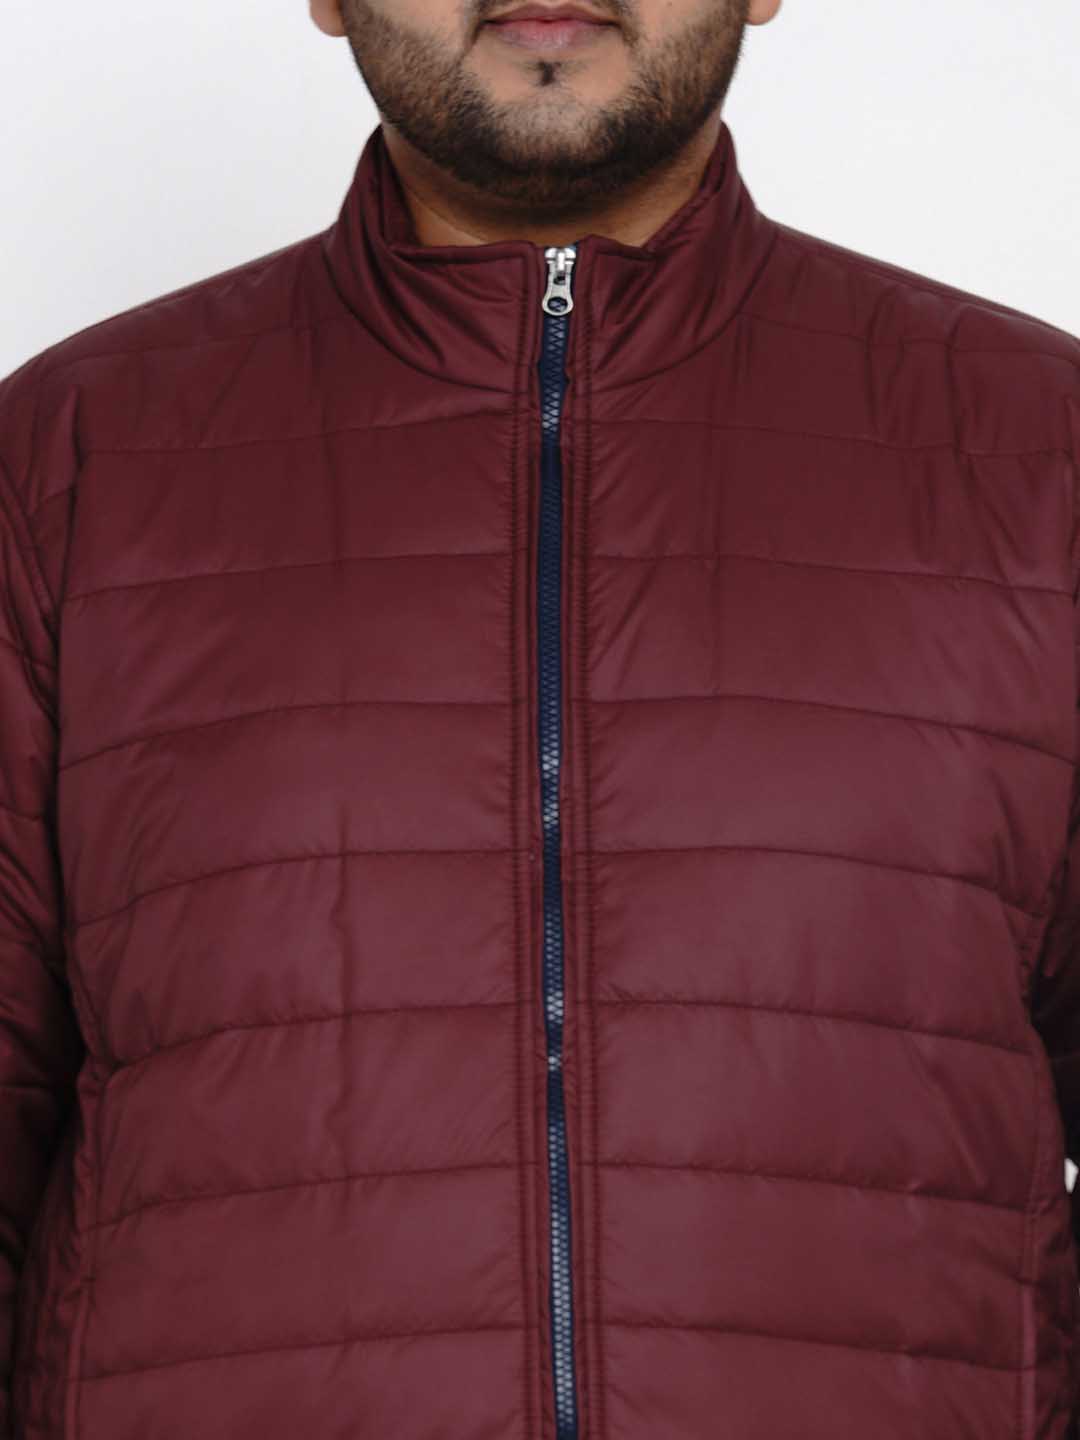 winterwear/jackets/JPJKT7388/jpjkt7388-3.jpg